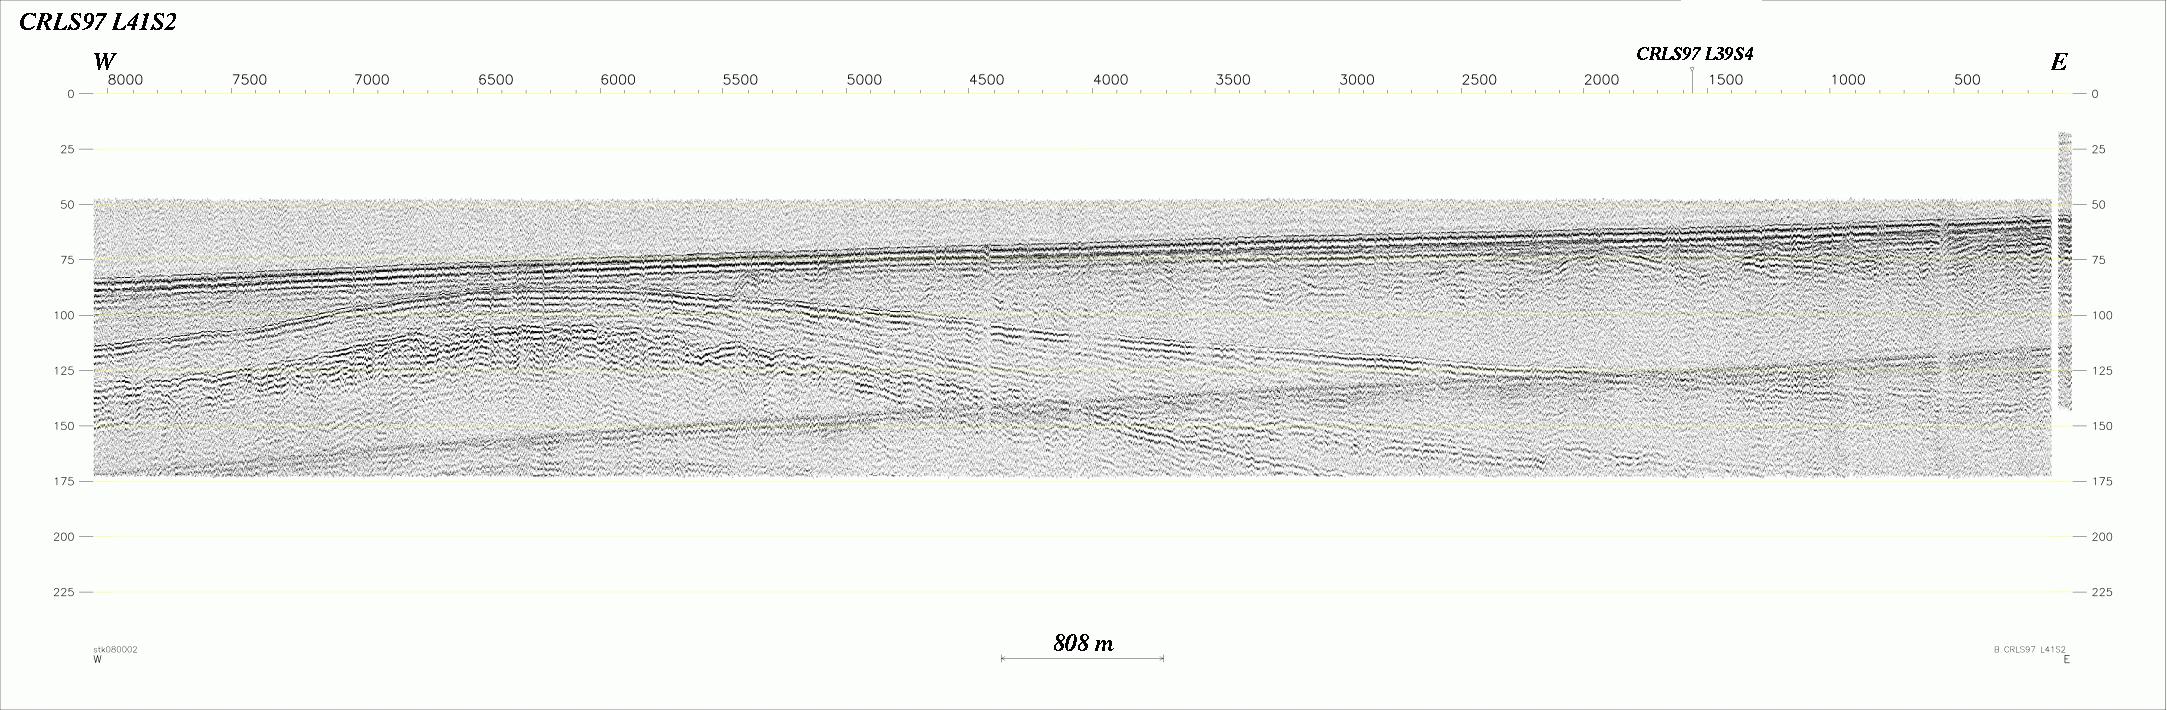 Seismic Reflection Profile Line No.: L41s2 (270782 bytes)